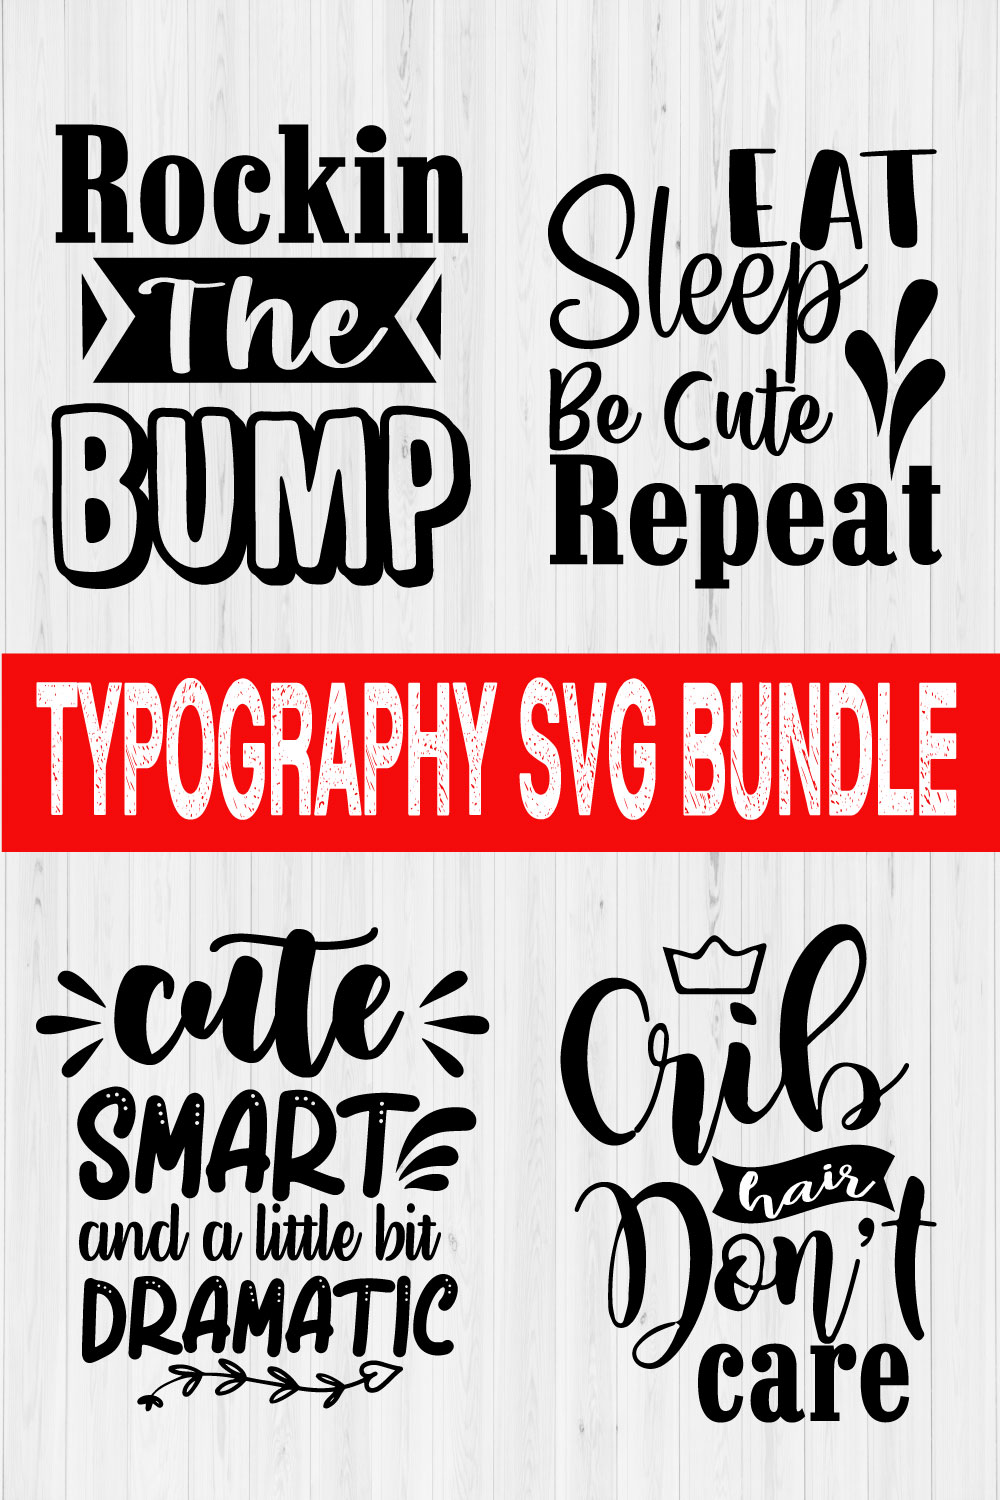 Typography Svg Bundle Vol1 pinterest preview image.